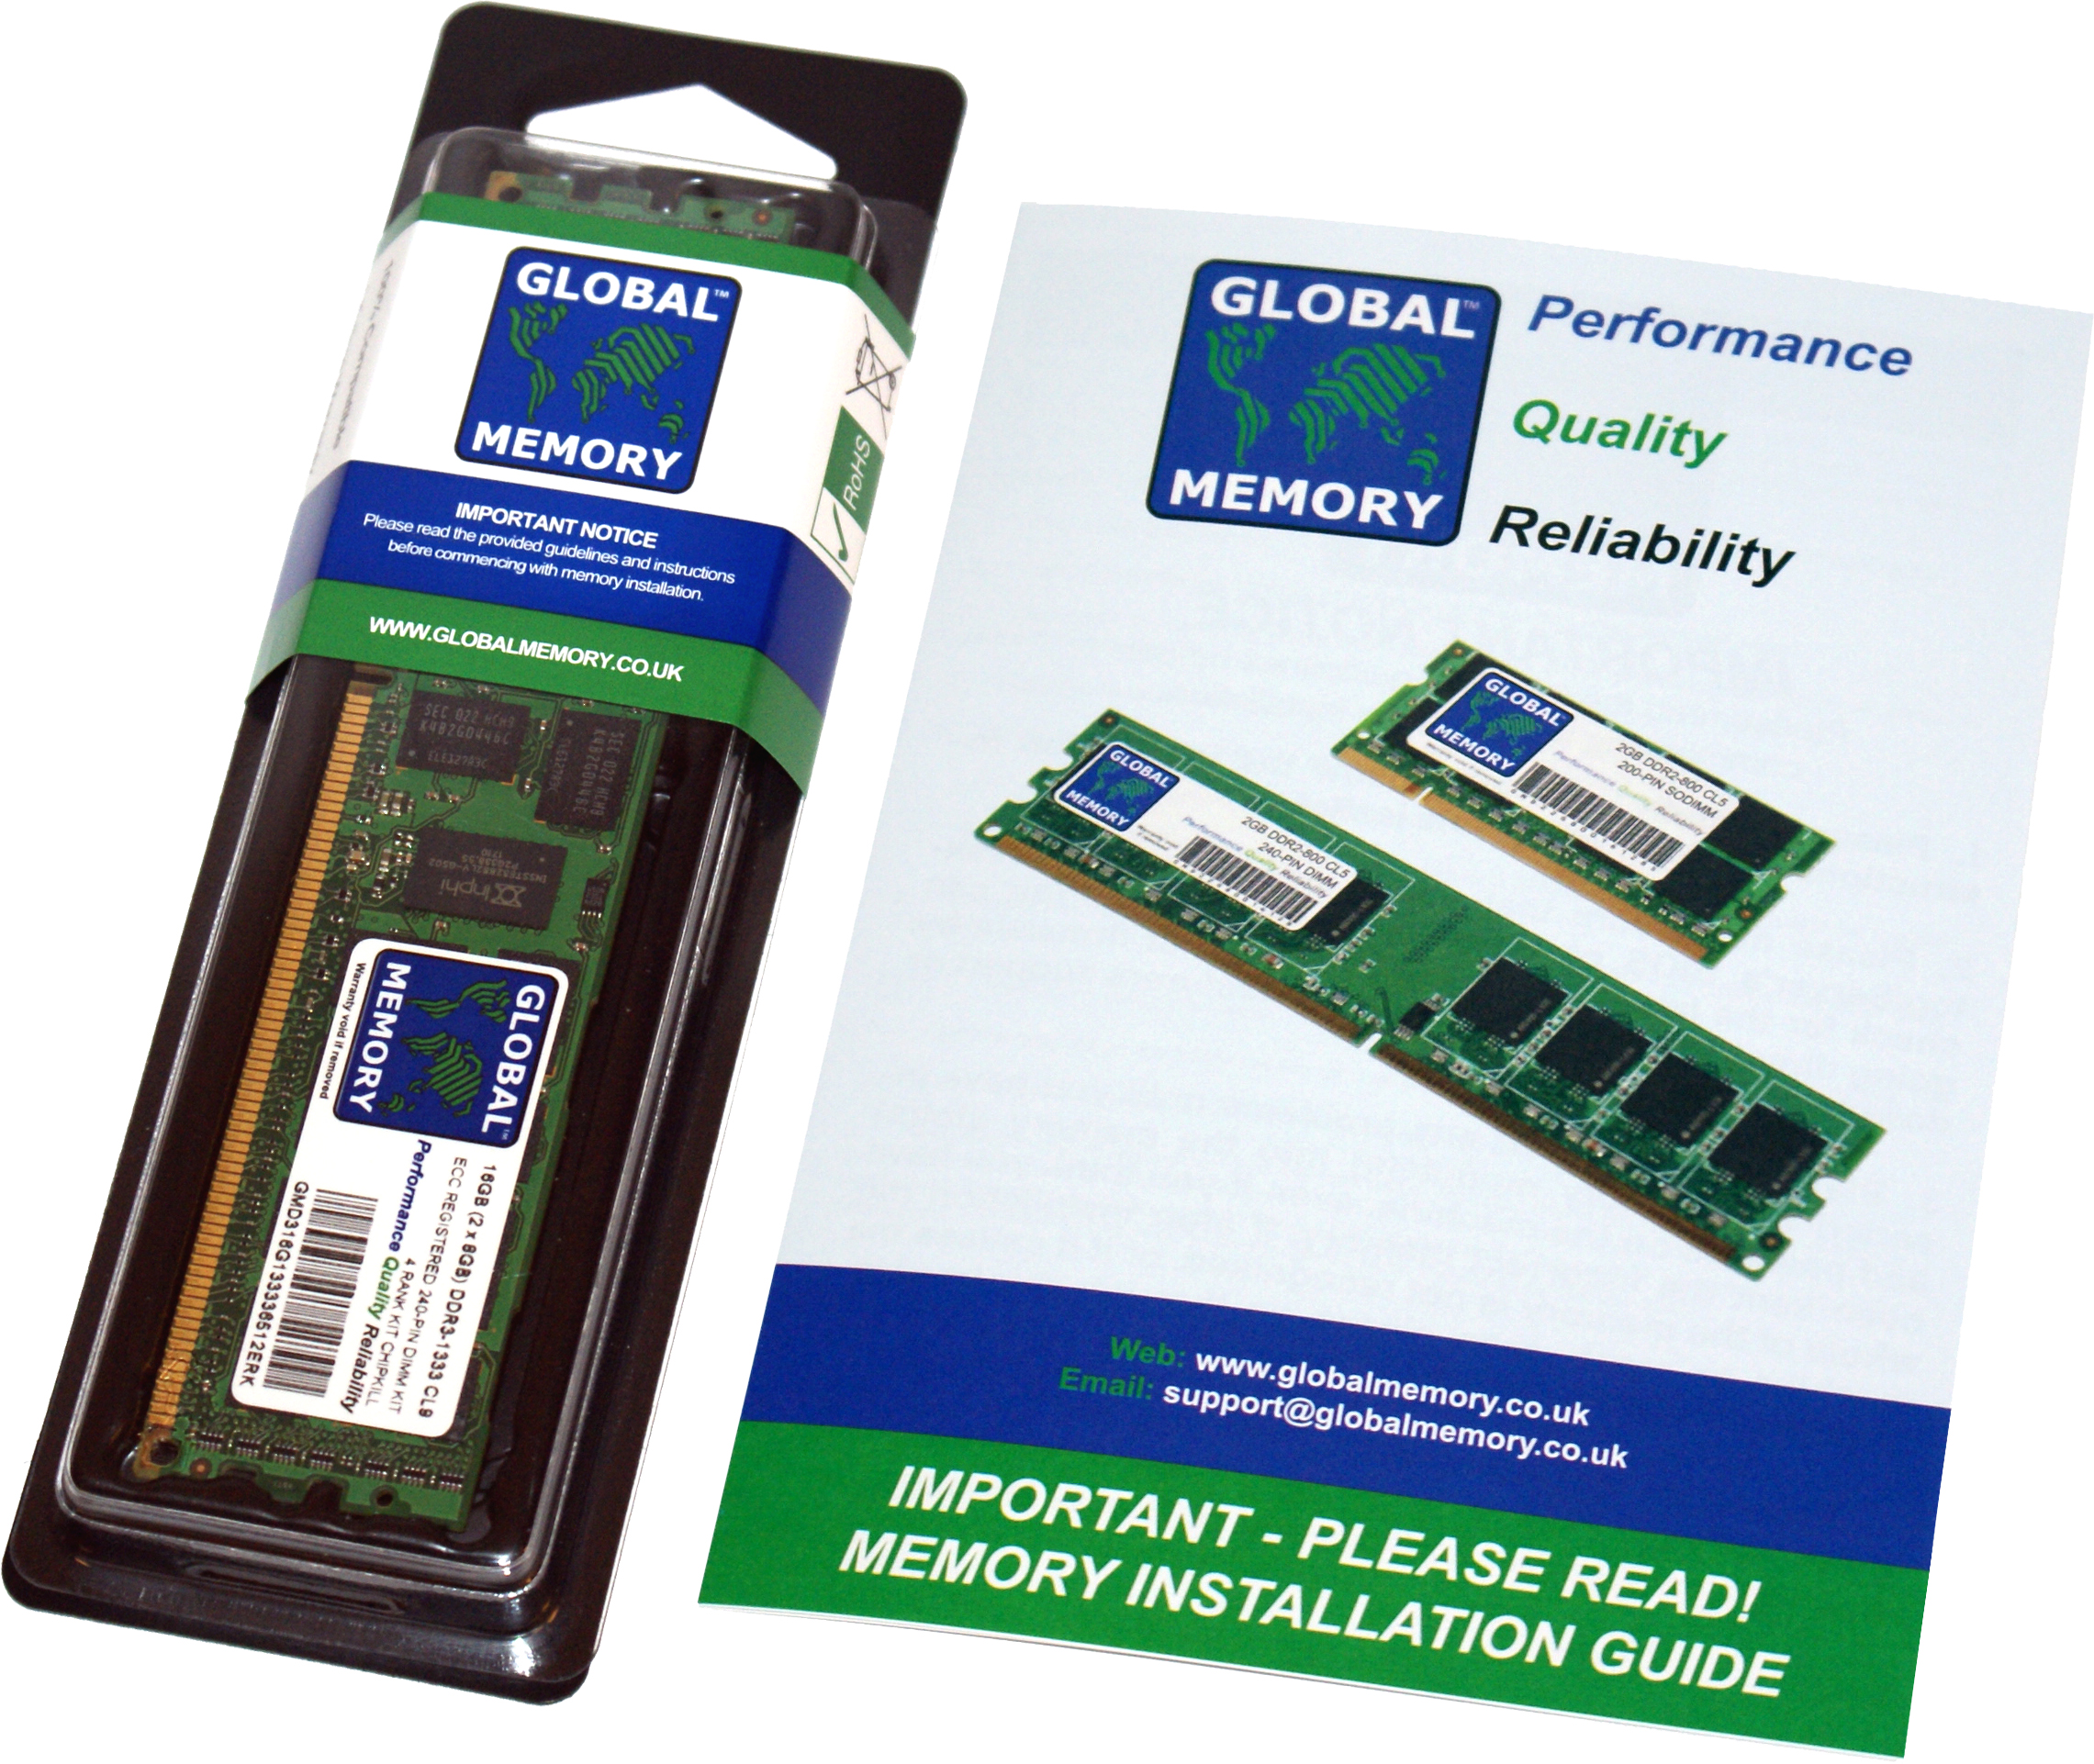 64GB DDR4 2933MHz PC4-23400 288-PIN LOAD REDUCED ECC REGISTERED DIMM (LRDIMM) MEMORY RAM FOR SUN SERVERS/WORKSTATIONS (4 RANK CHIPKILL)